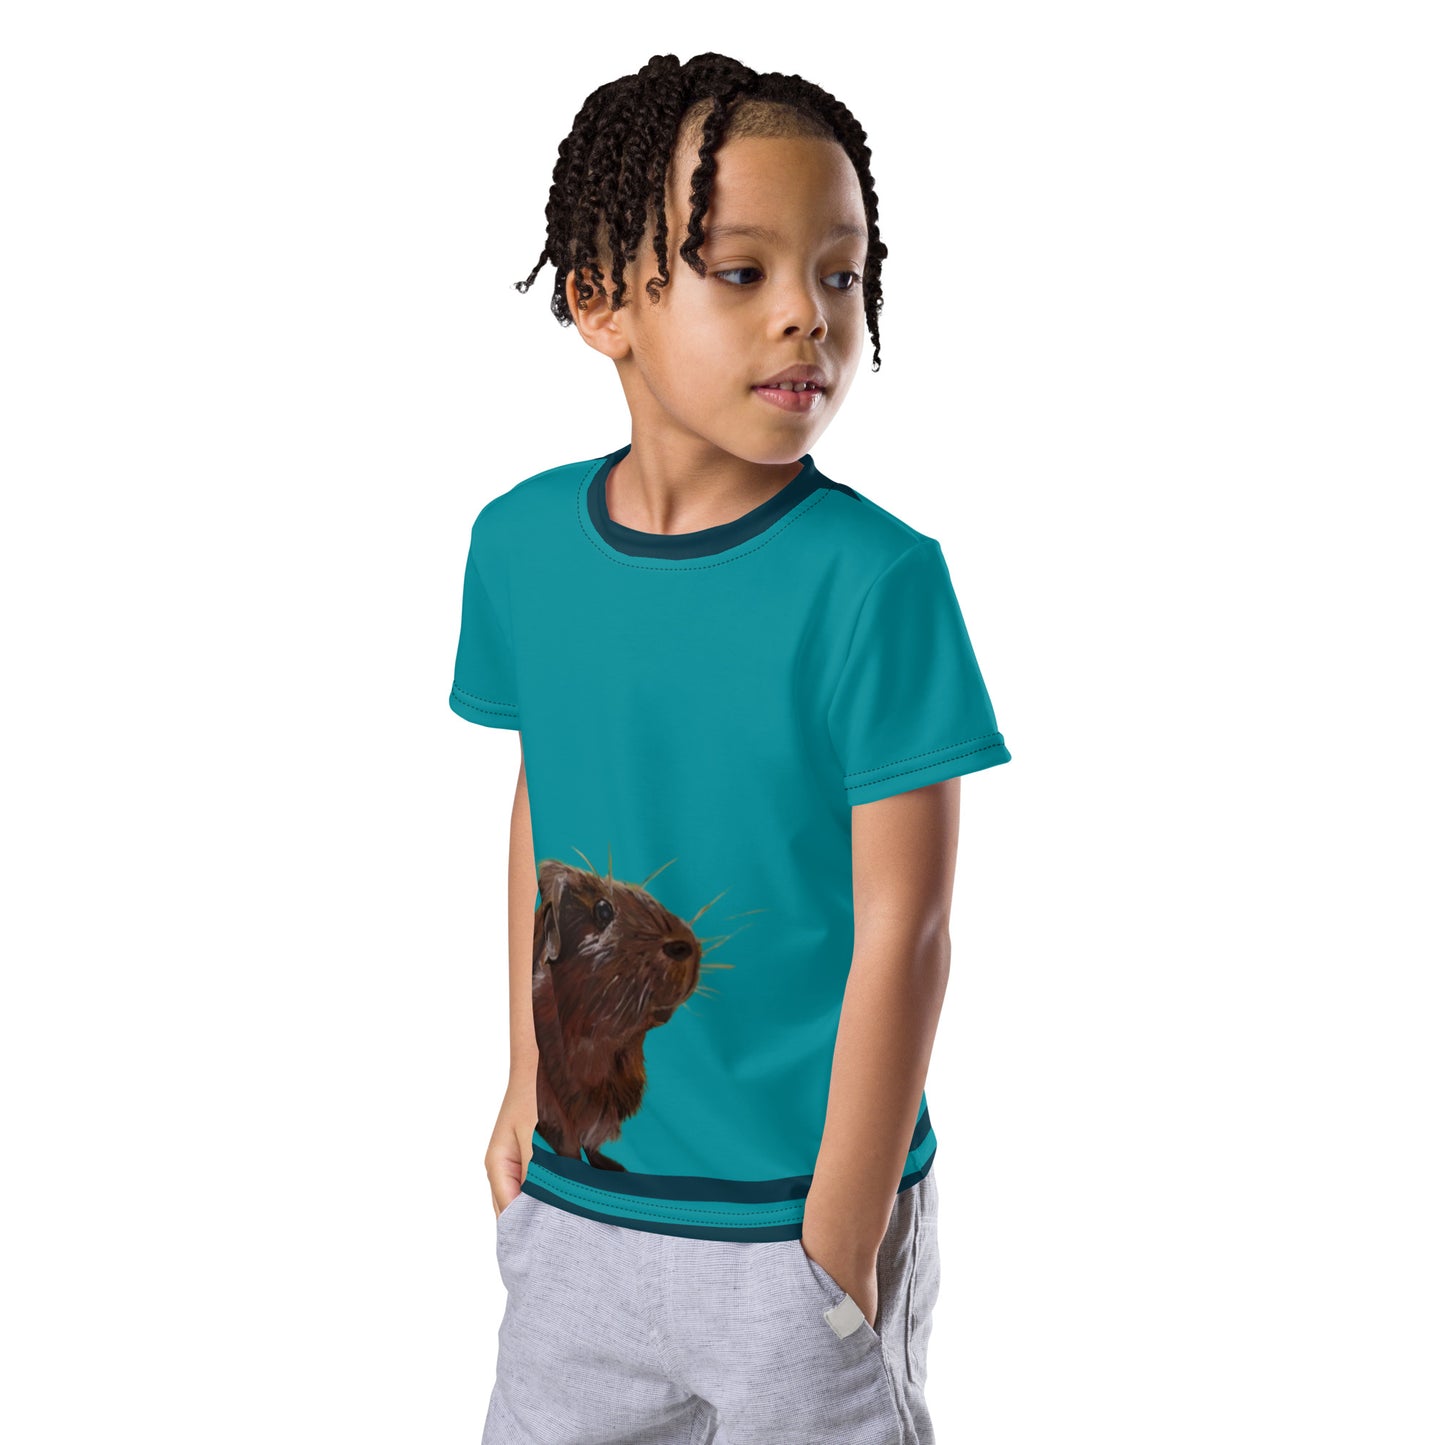 Gunther the Guinea Pig (Teal) Kids crew neck t-shirt